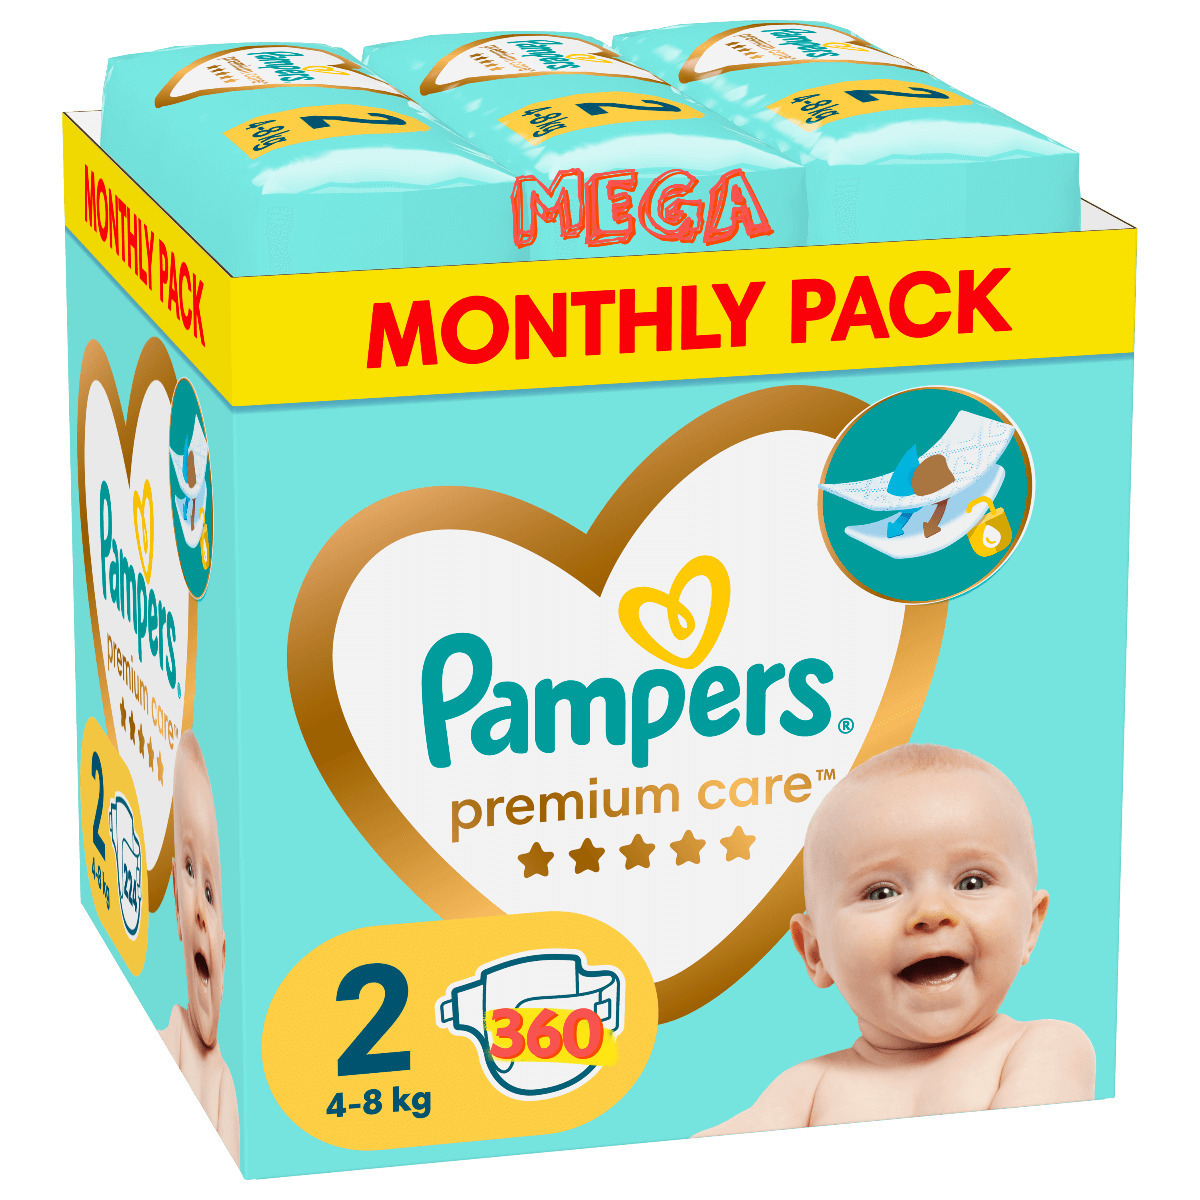 Pampers Harmonie Mini - Diapers, size 2 (4-8 kg), 24 pcs